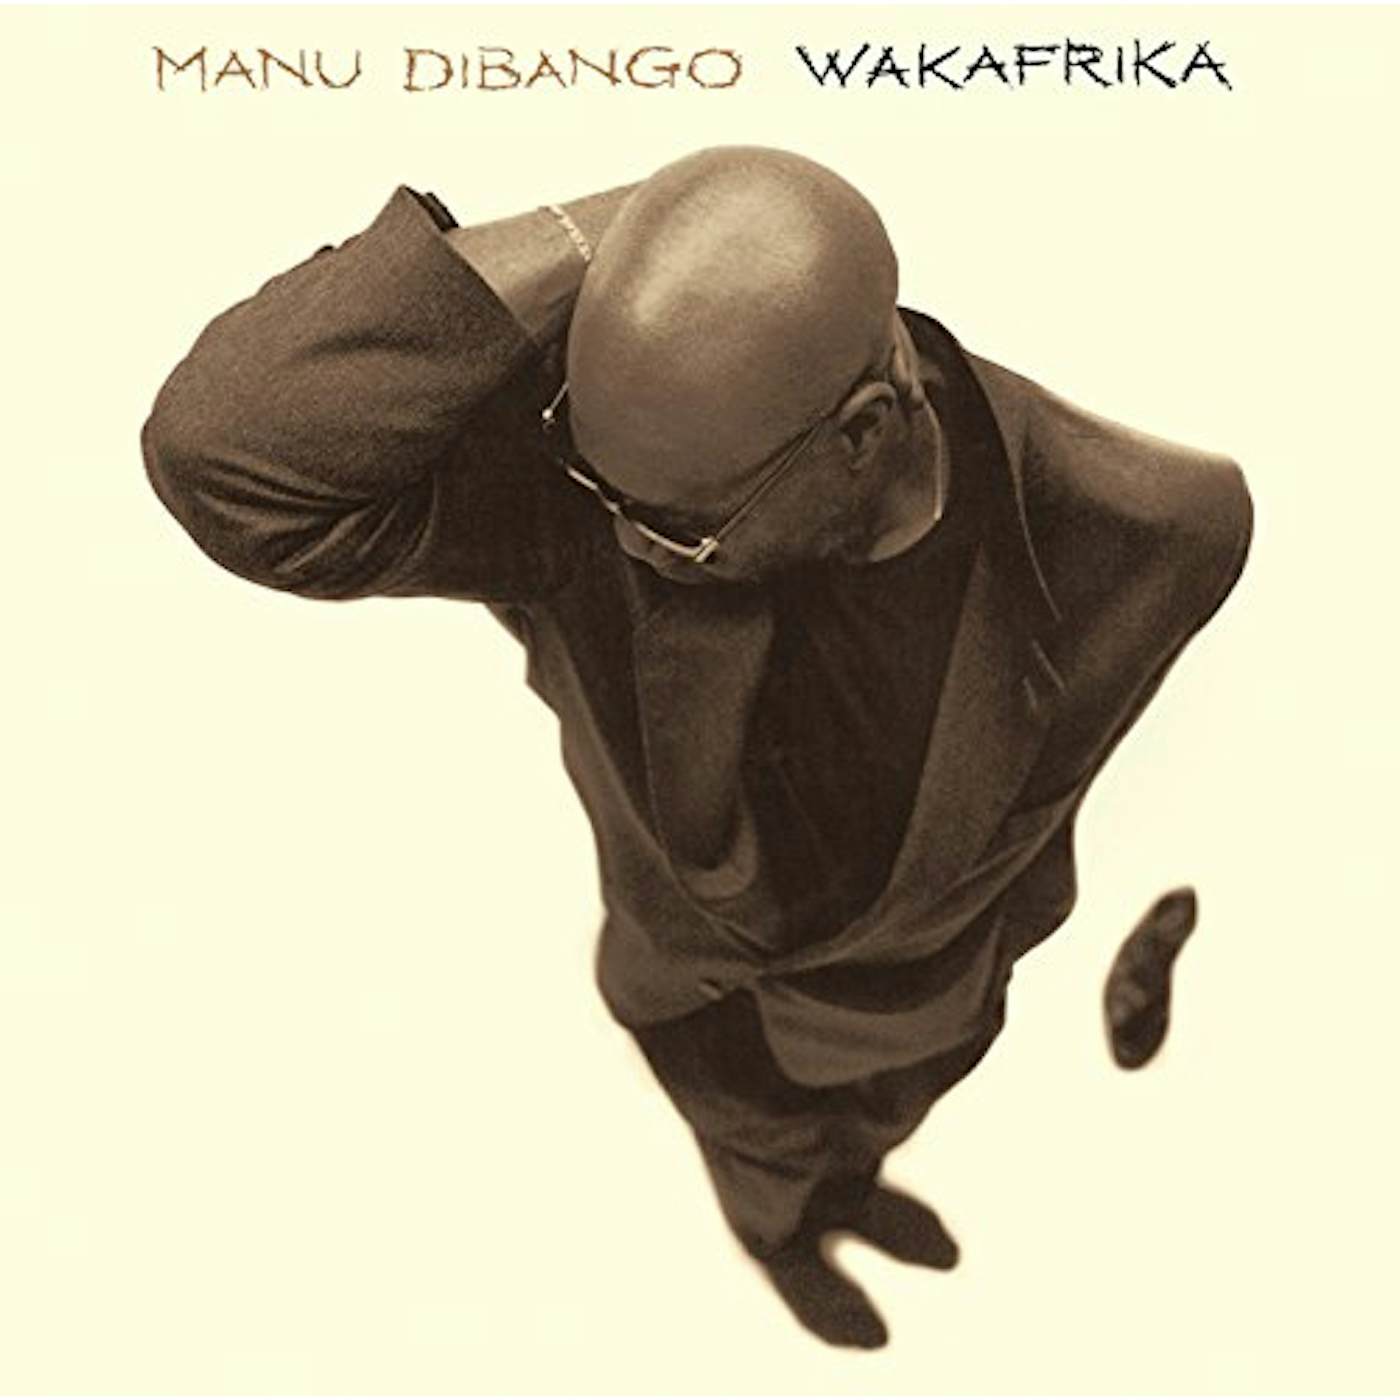 Manu Dibango WAKAFRIKA CD